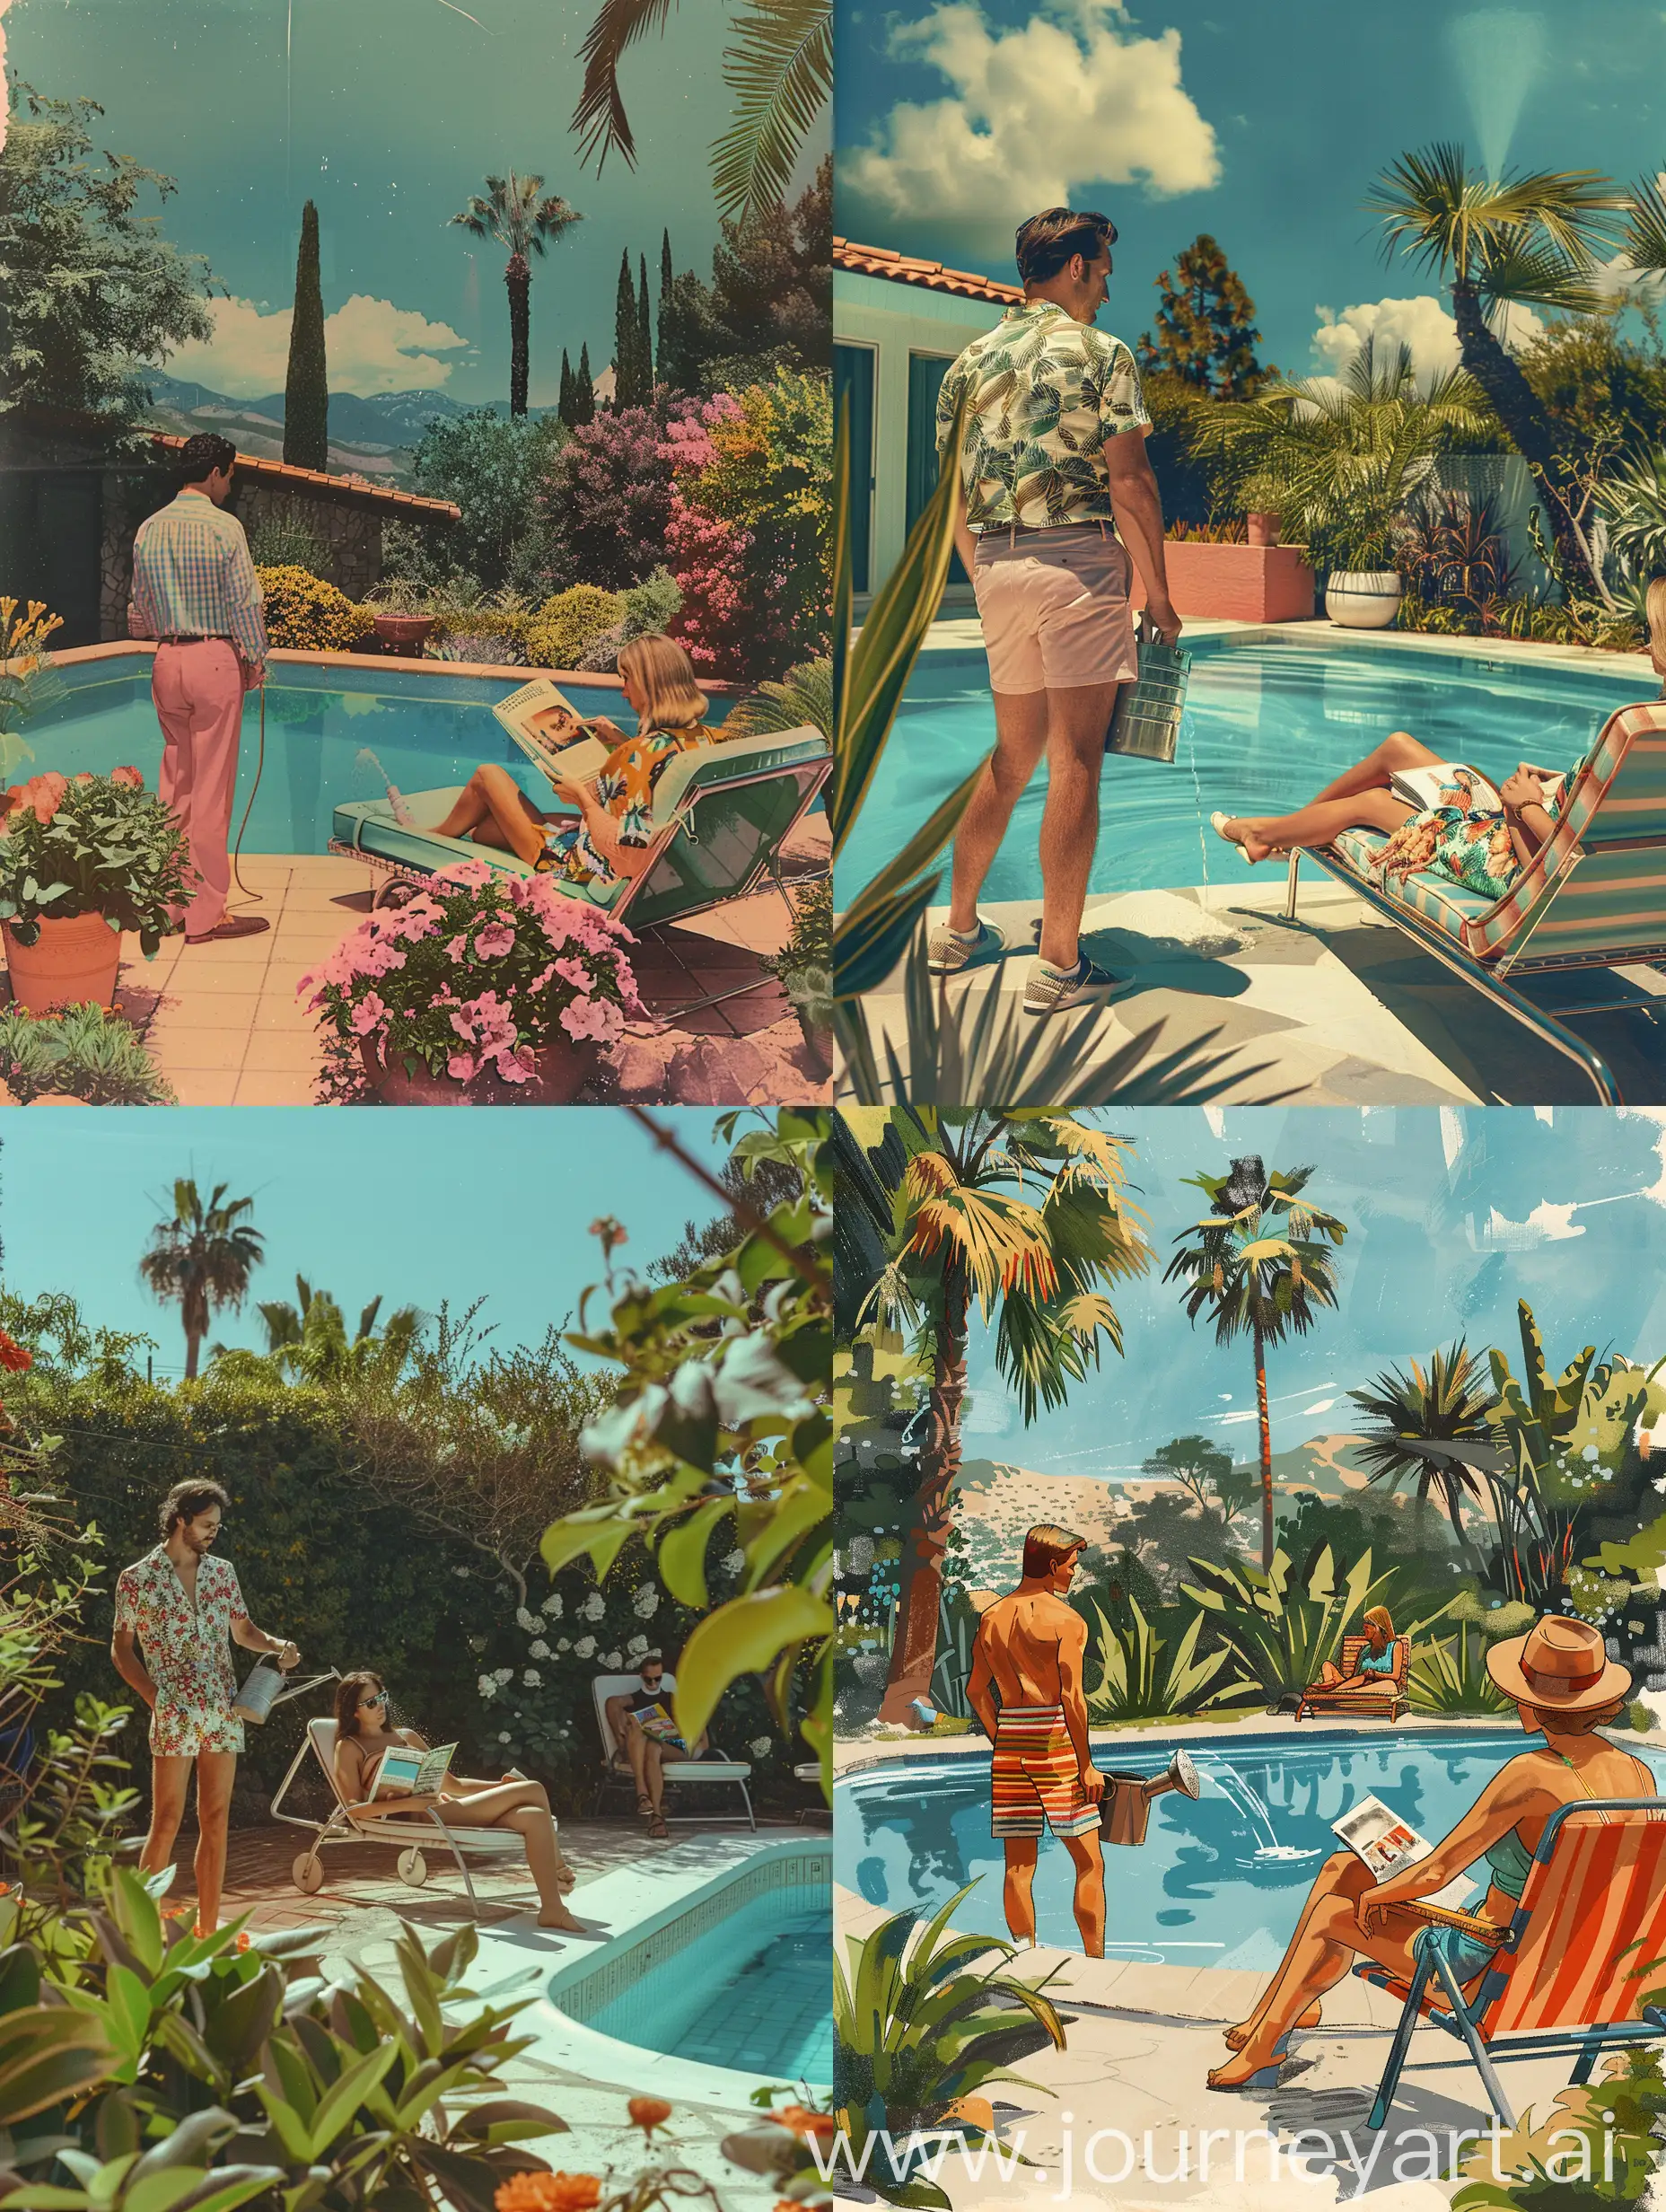 1980s-Couple-Enjoying-Leisure-Time-in-Garden-Oasis